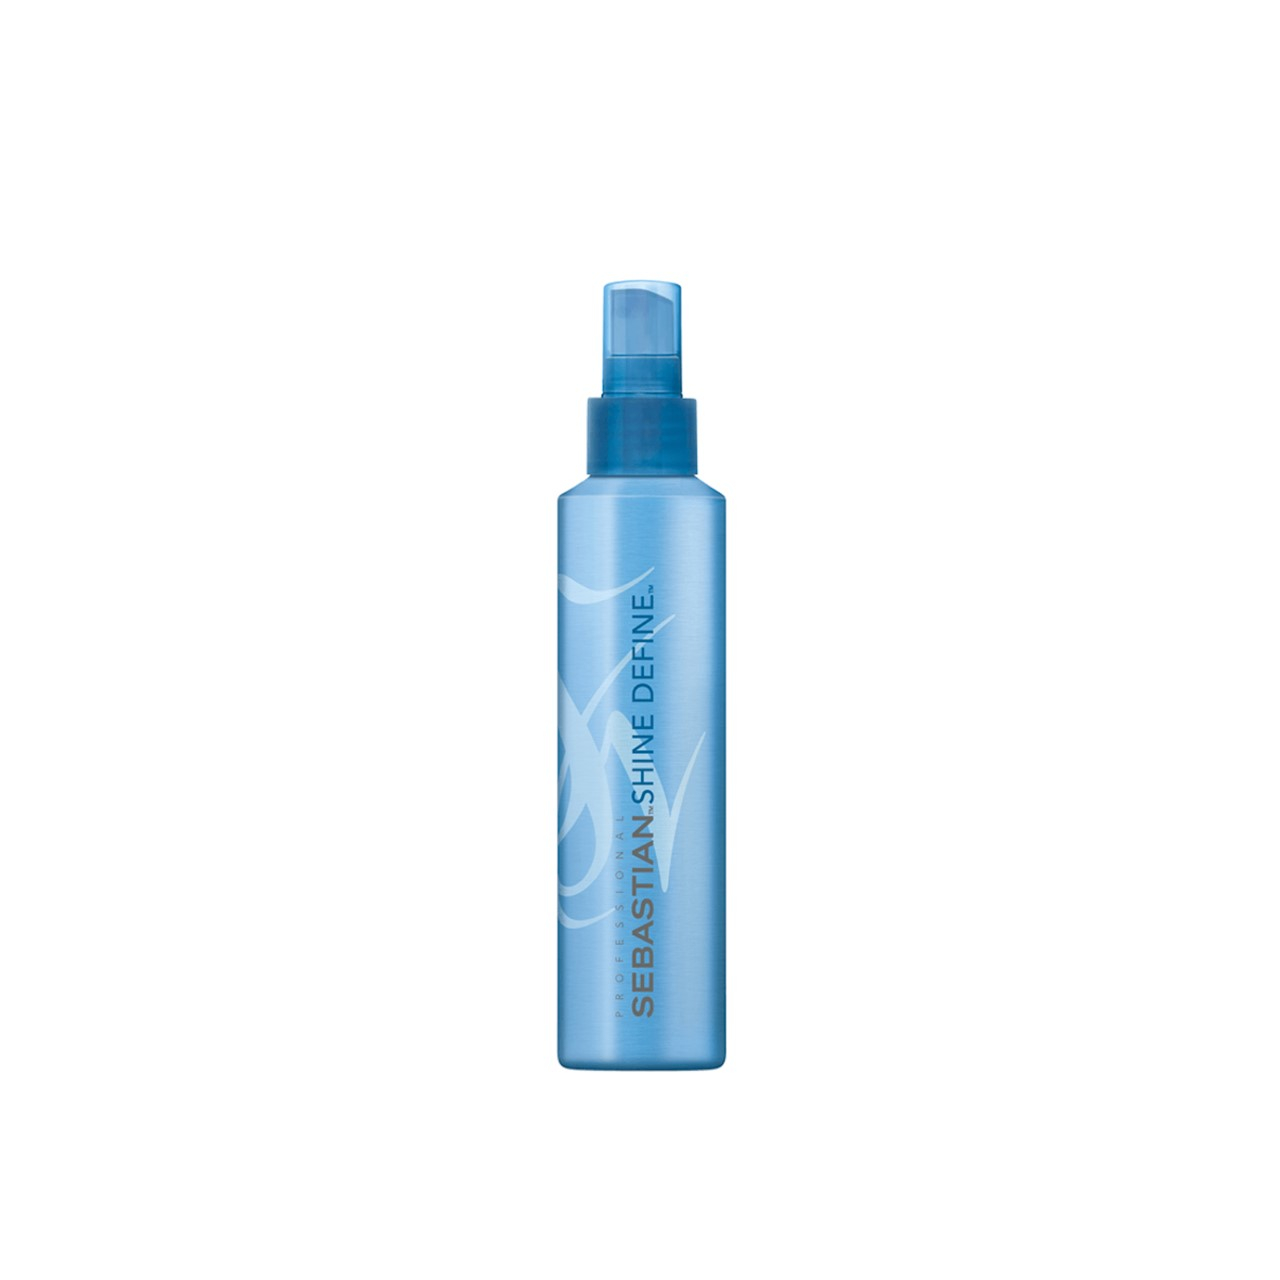 Sebastian Professional Shine Define Flexible Hold Hairspray 200ml